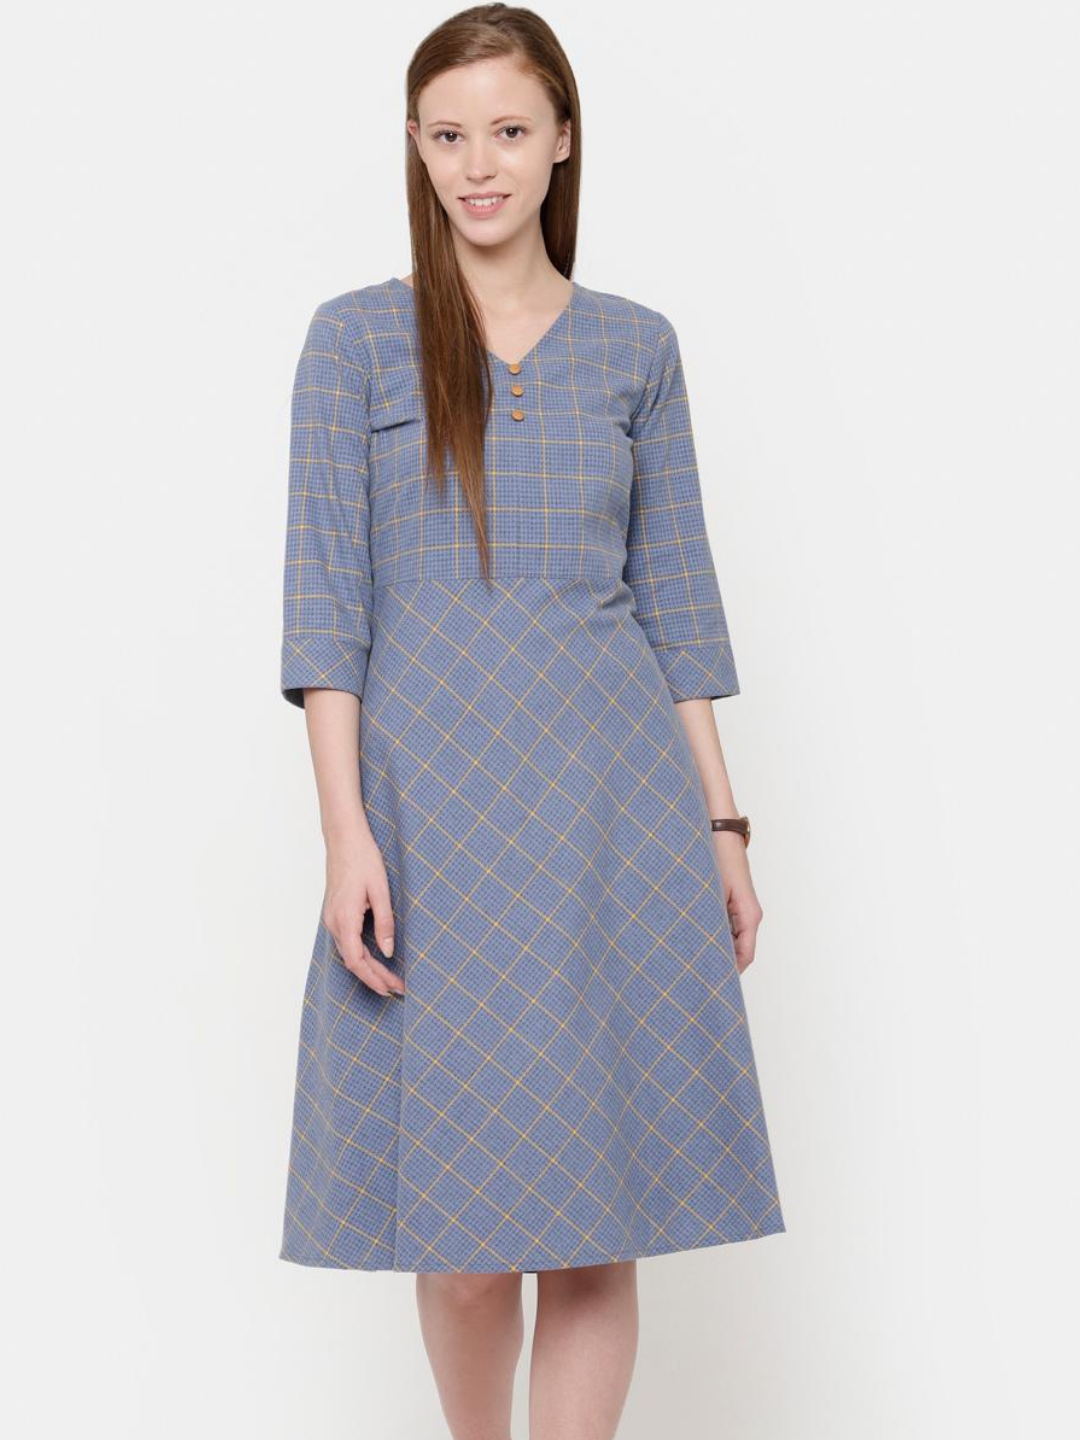 The Work Label - Blue checkered Pocket Dress -  Women's western work-wear in India